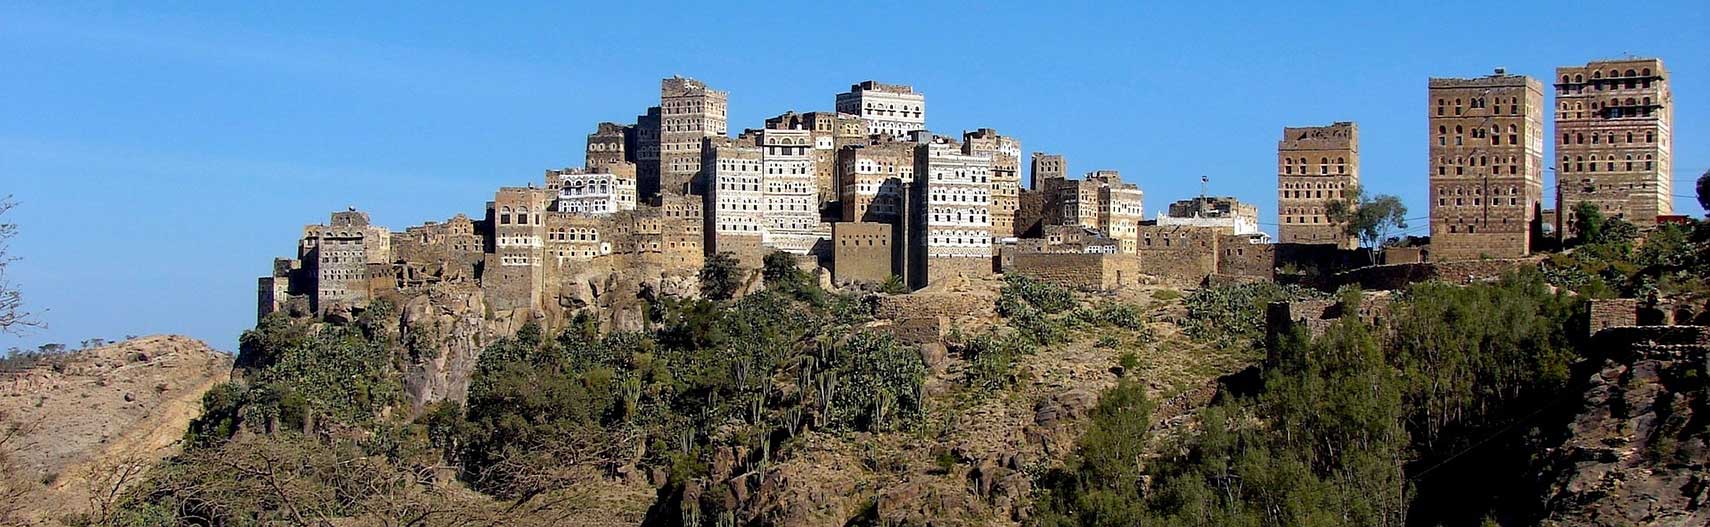 AlHajjarah, Yemen